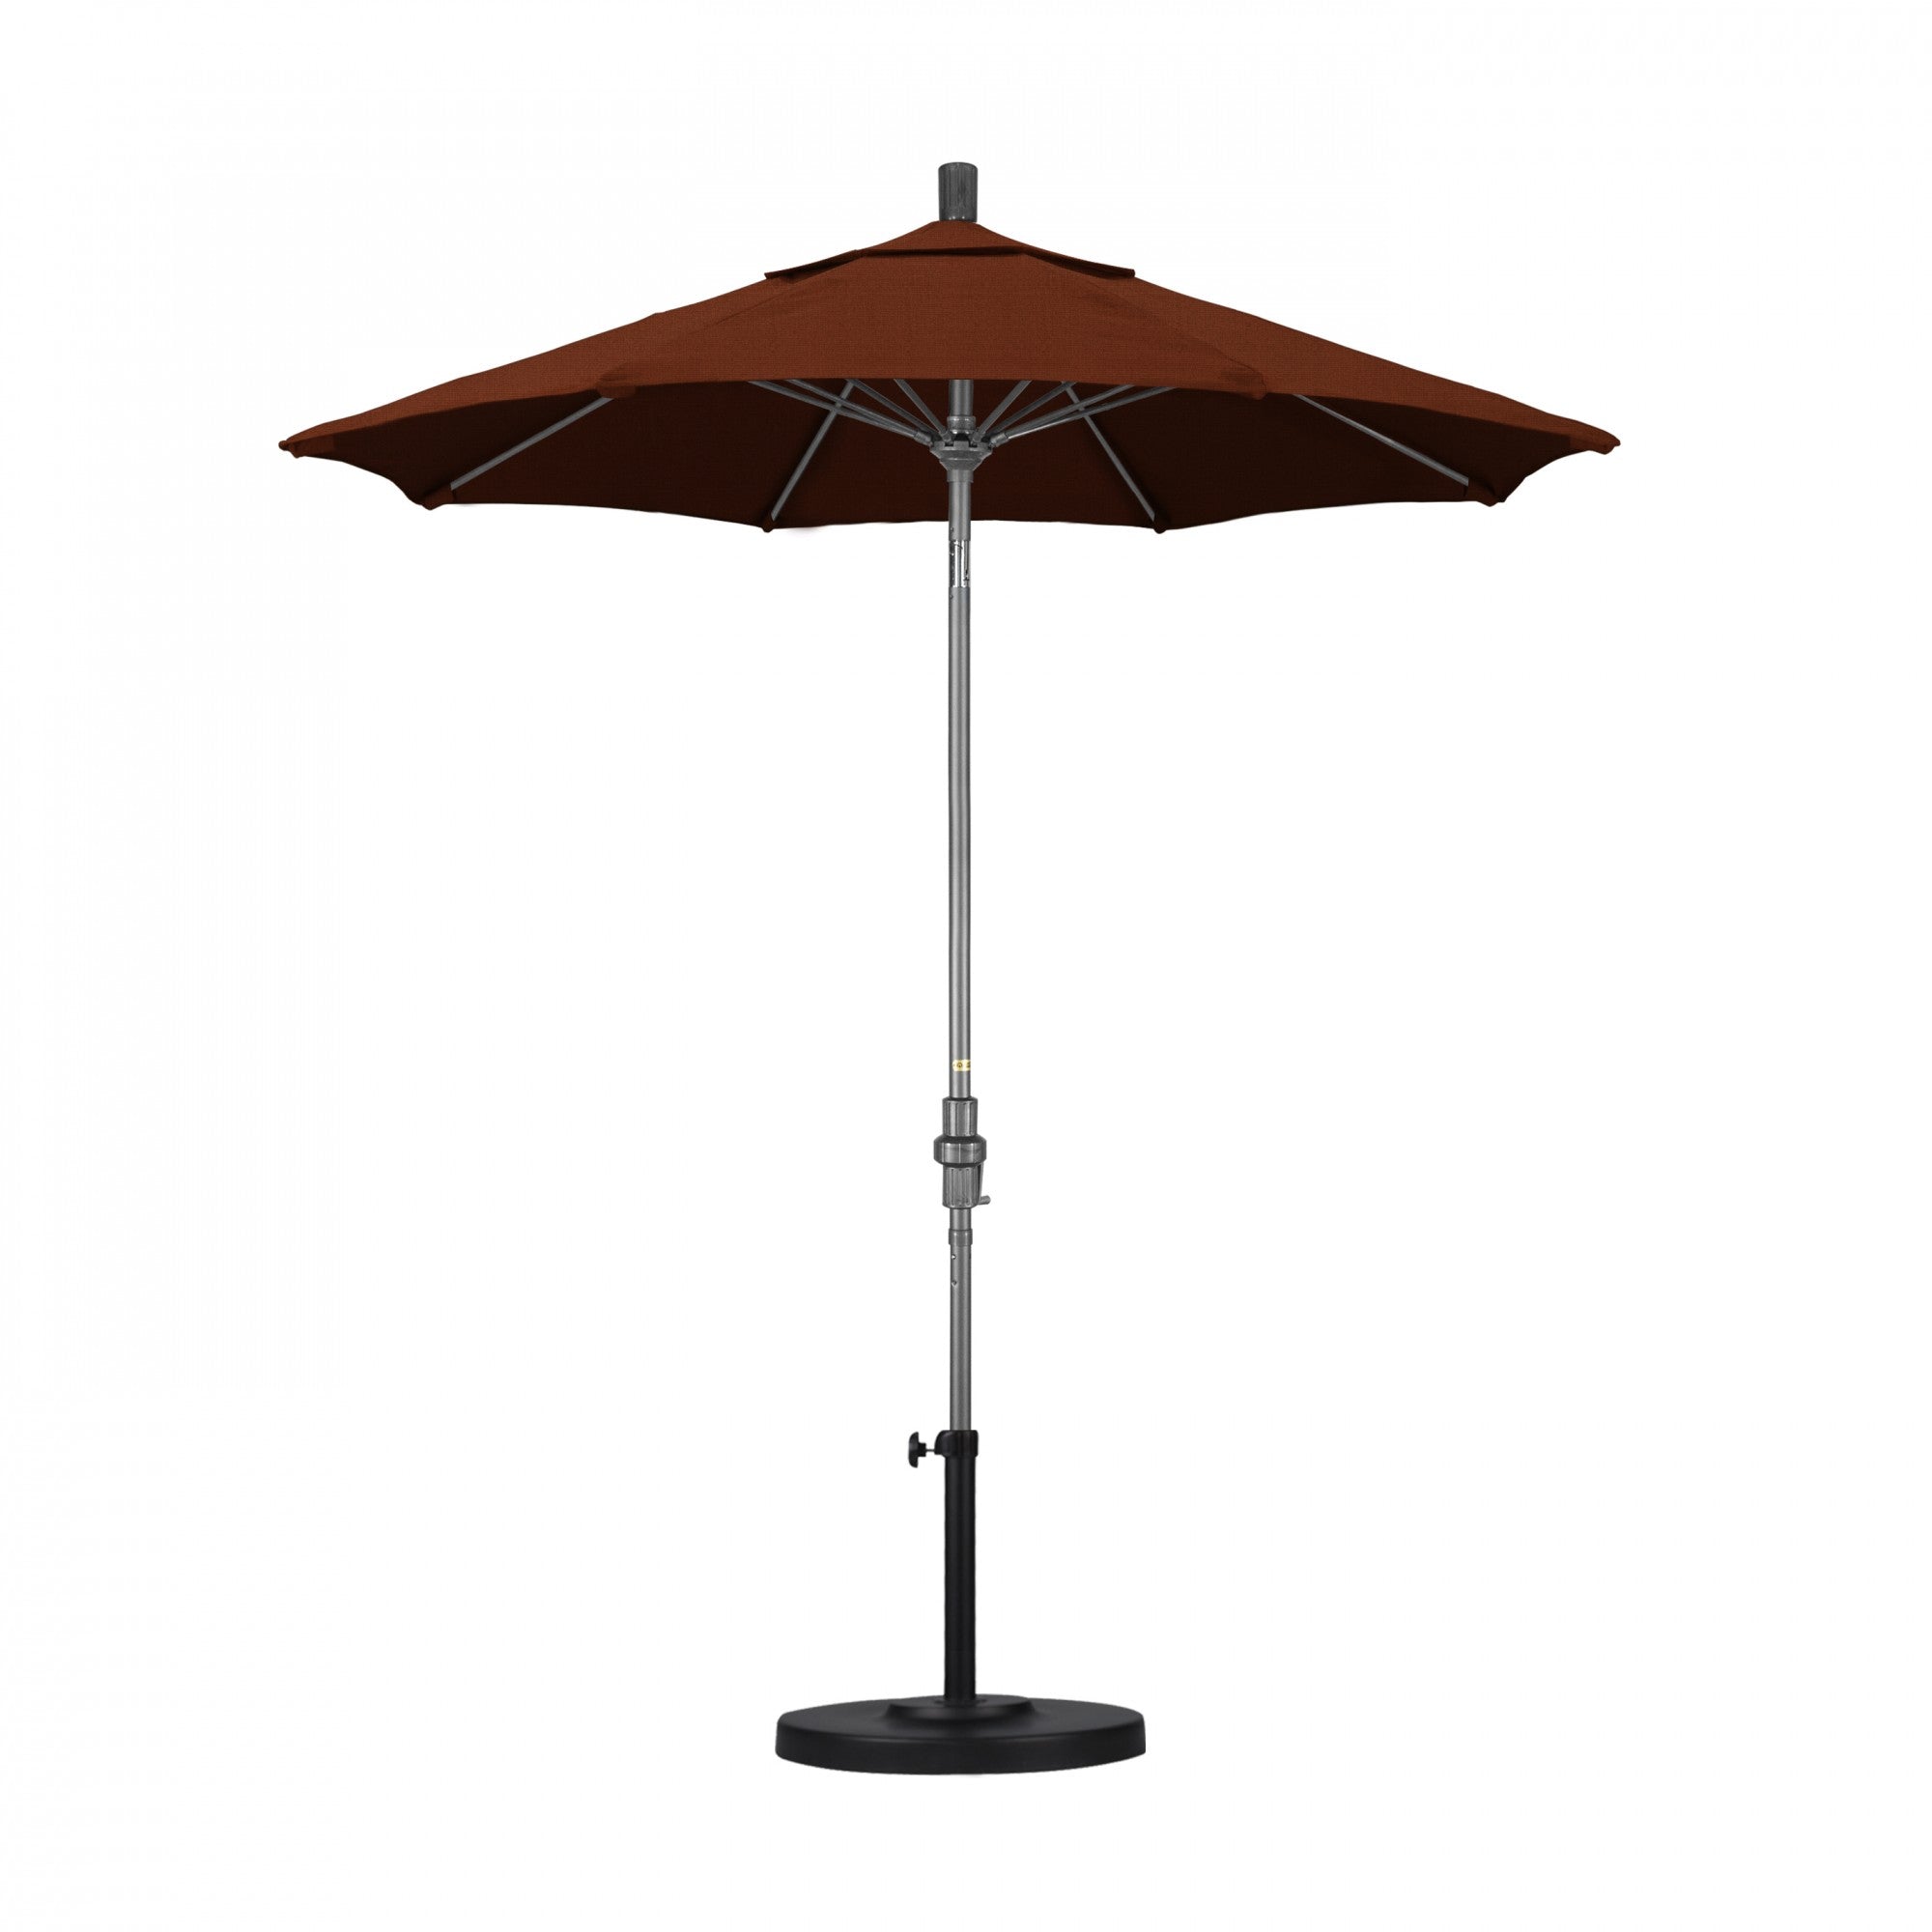 California Umbrella - 7.5' - Patio Umbrella Umbrella - Aluminum Pole - Brick - Pacifica - GSCUF758010-SA40